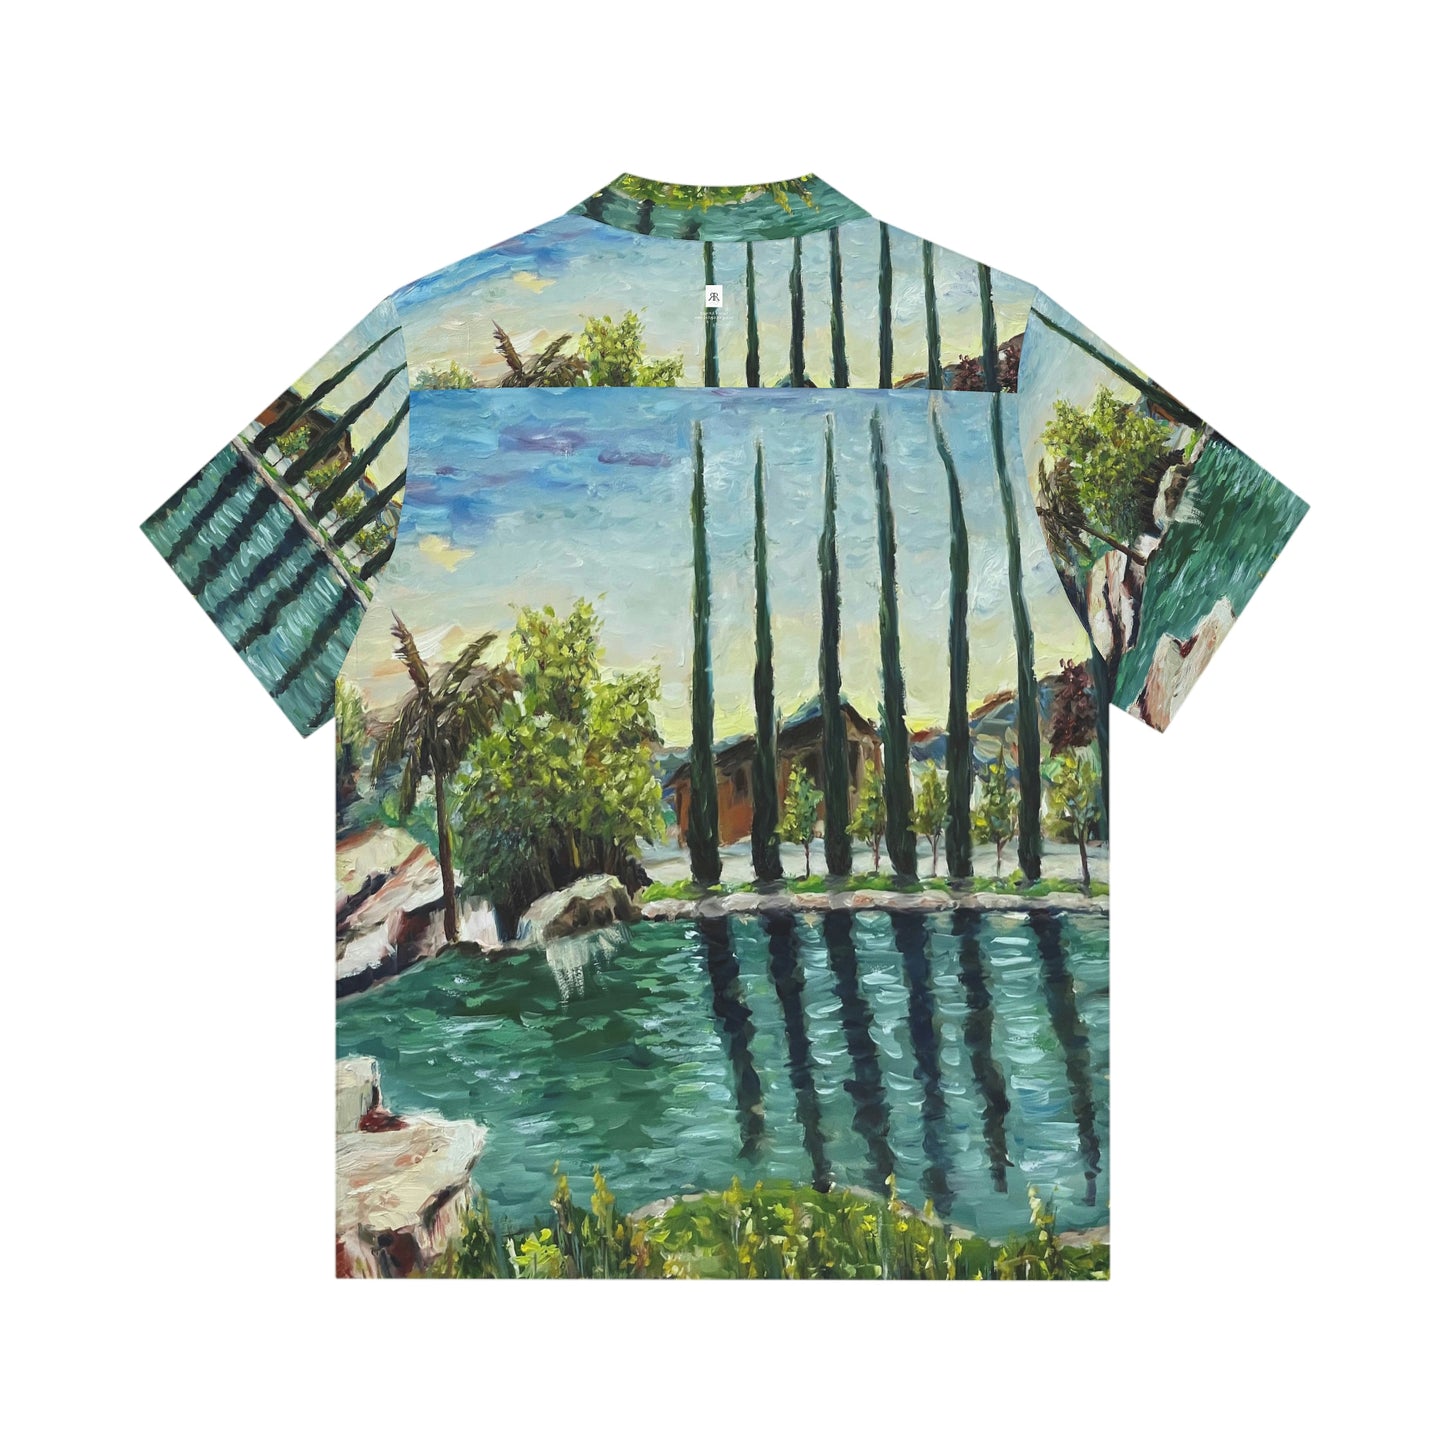 The Pond at GBV Winery Temecula Original Landscape Men's Hawaiian Shirt